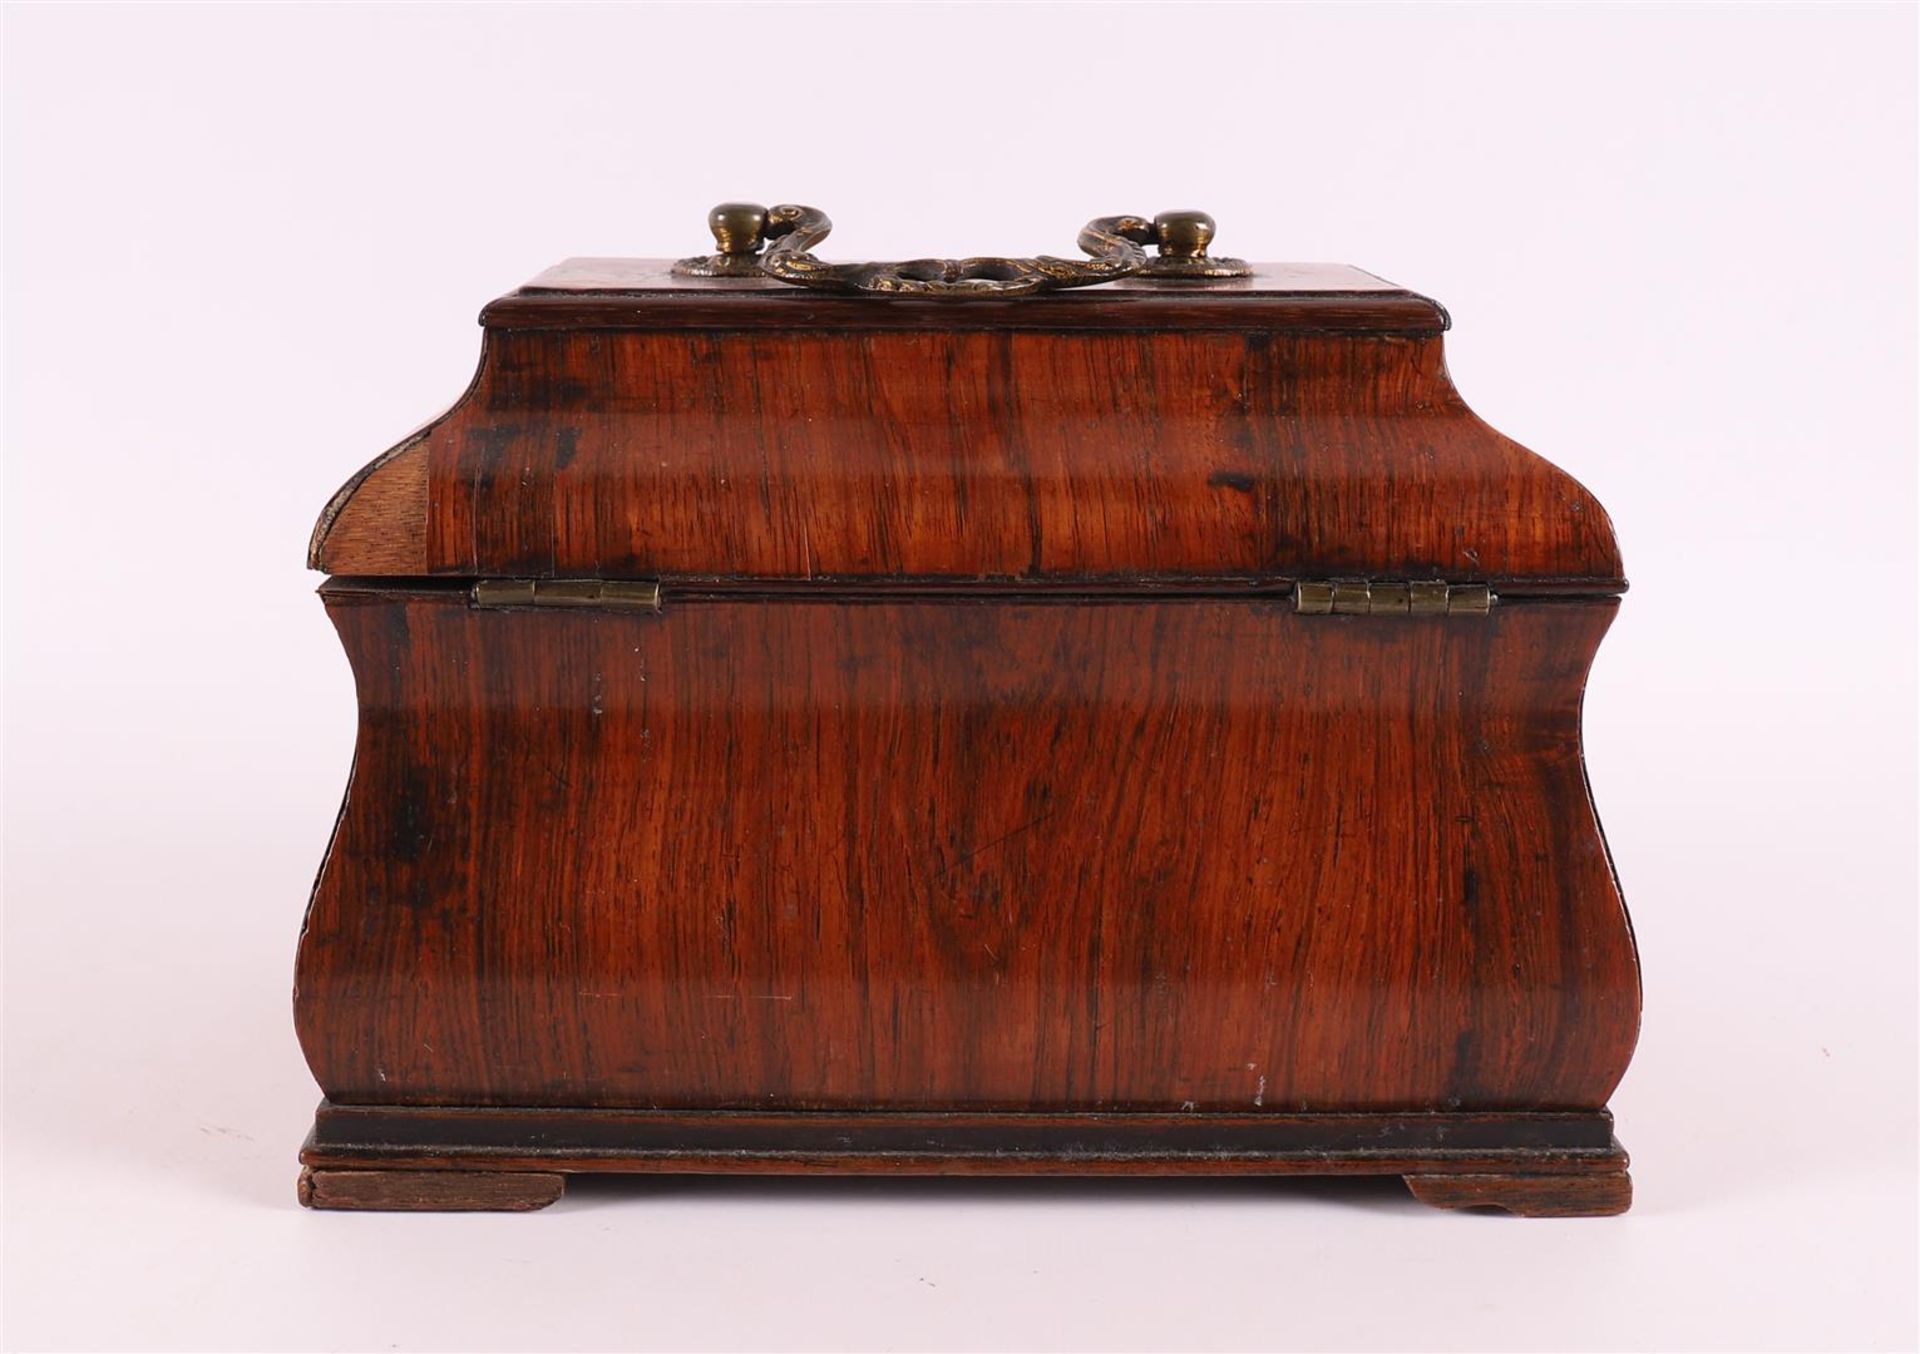 A Dutch rosewood tea box, mid 18th century, h 14 x l 20 x w 12 cm. - Image 3 of 7